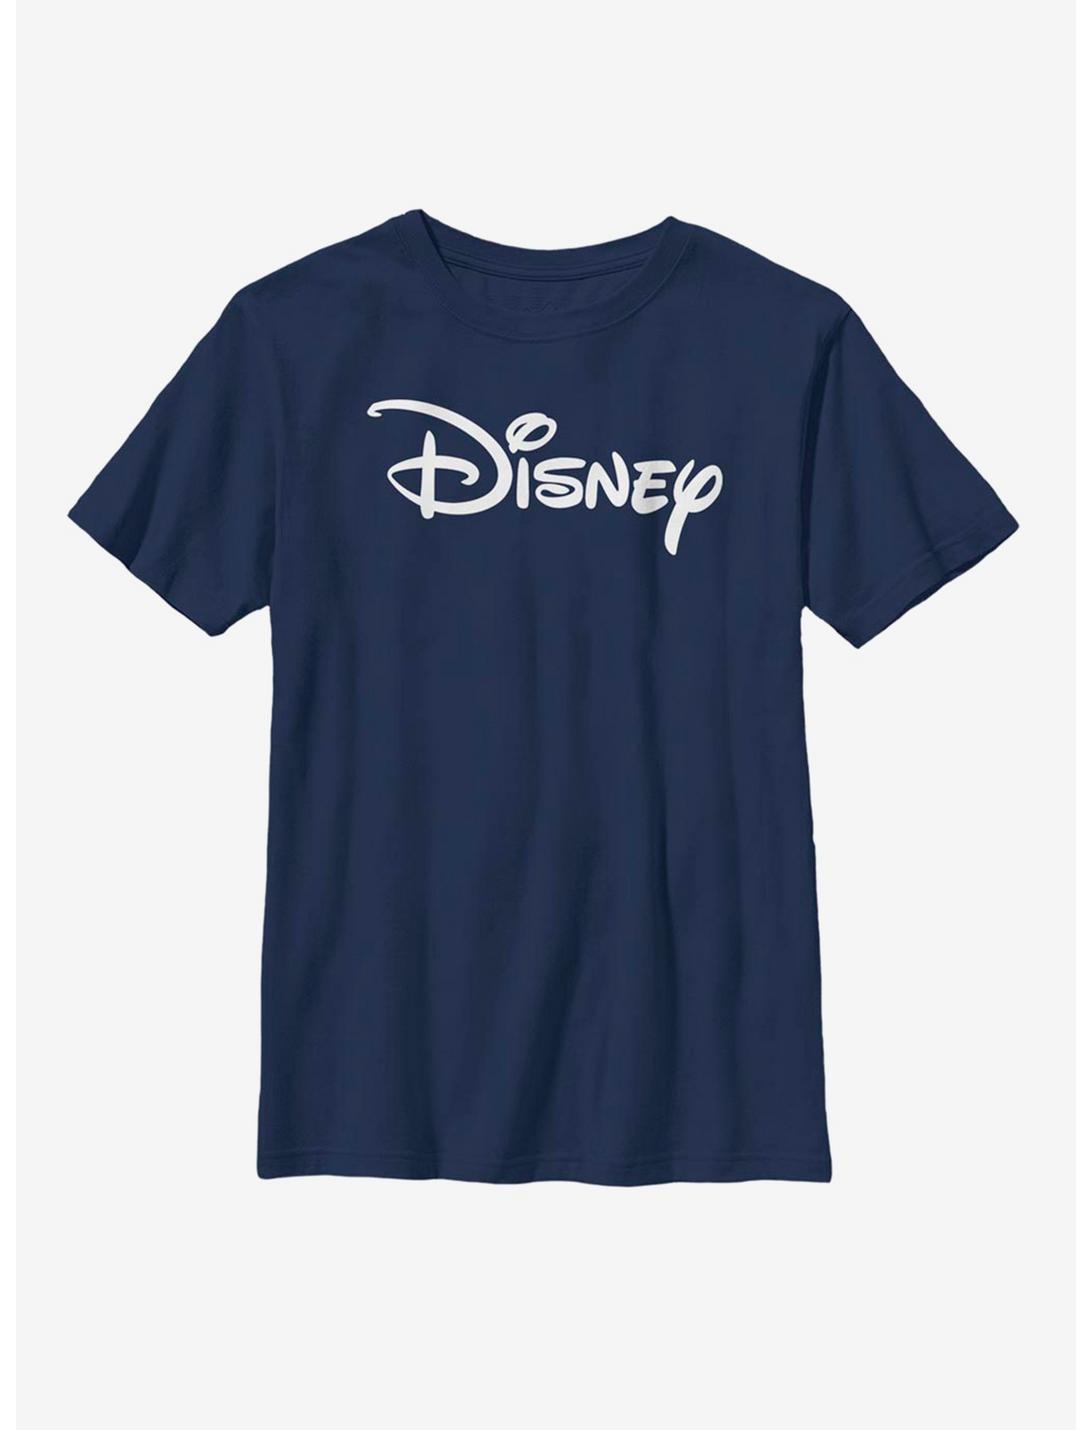 Disney Classic Disney Logo Youth T-Shirt, NAVY, hi-res